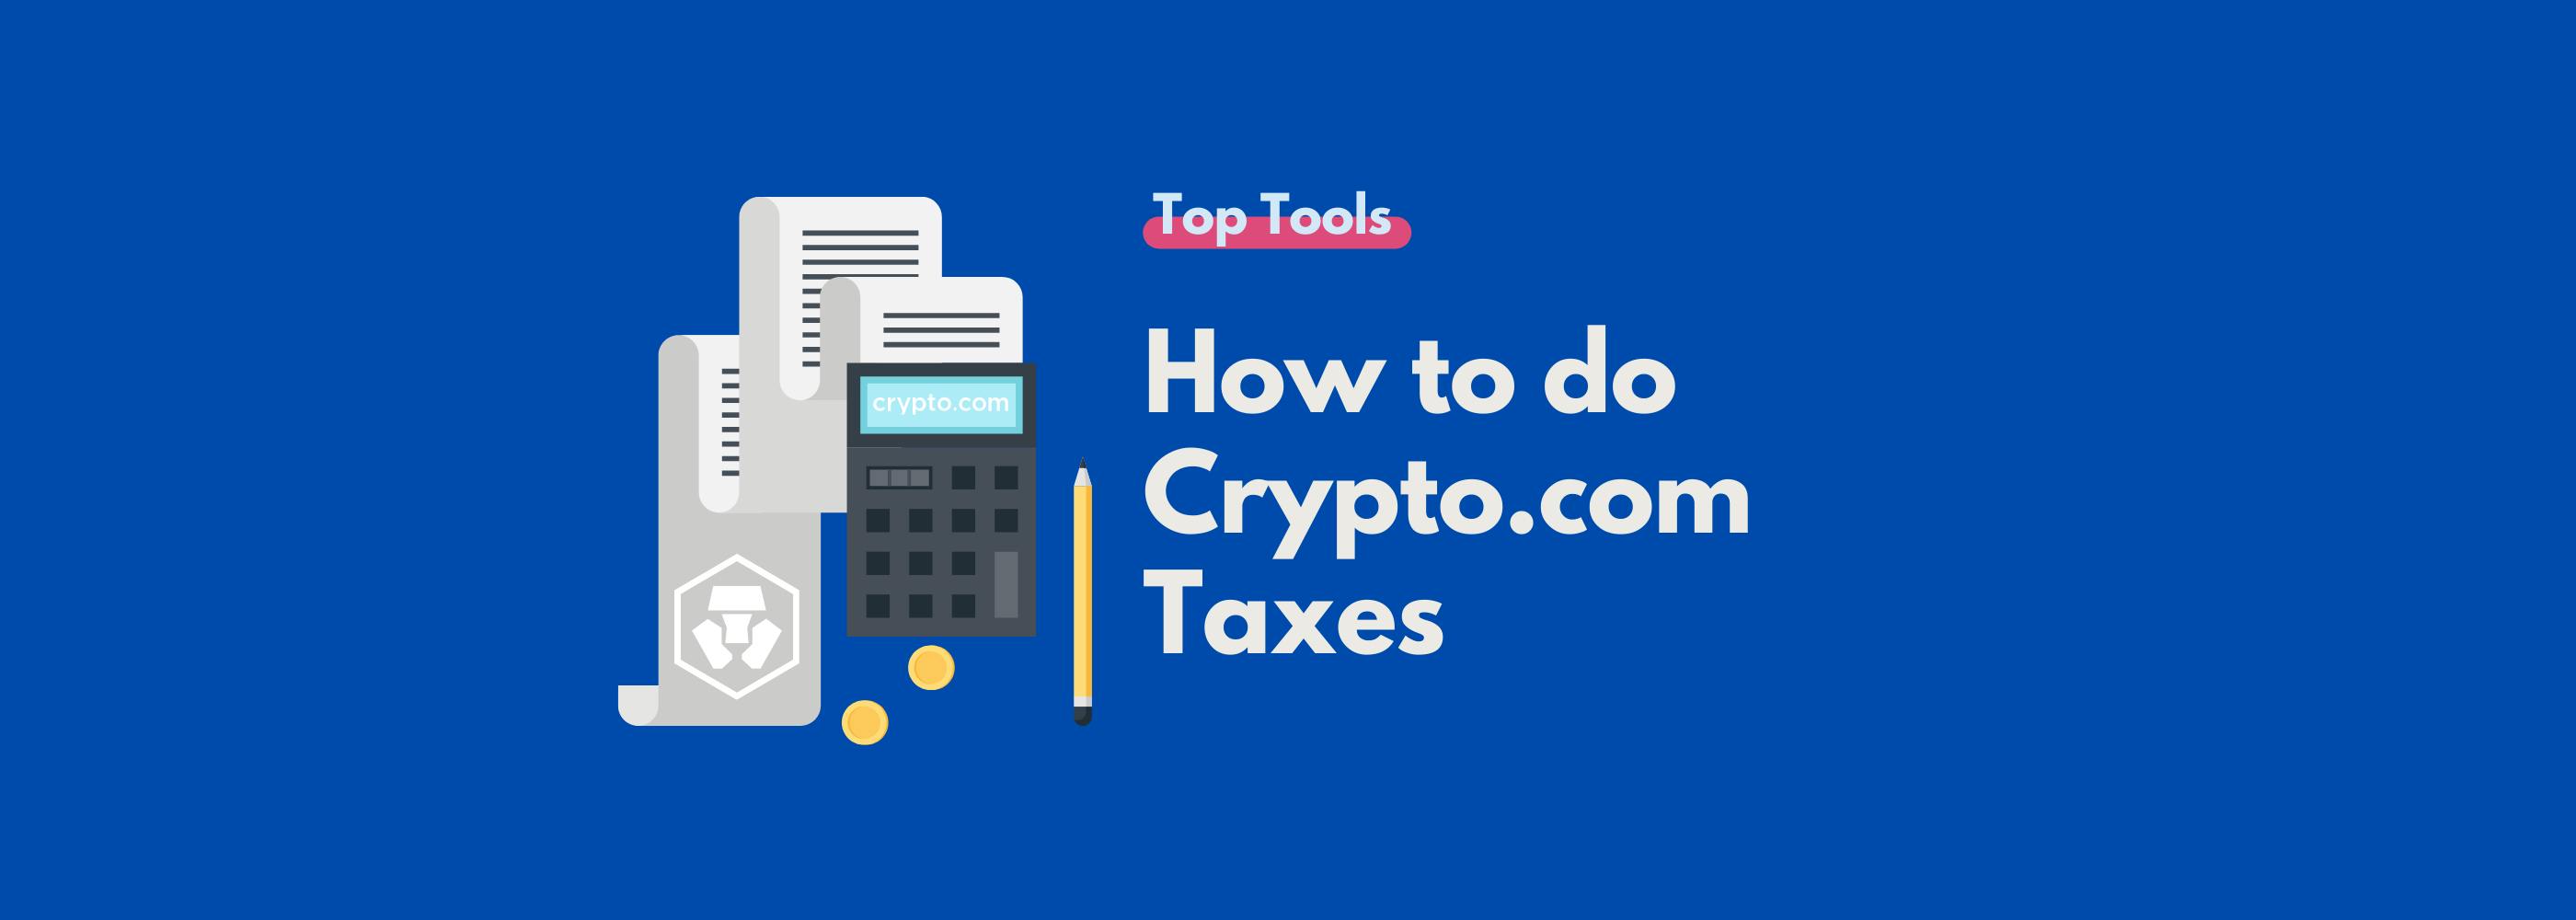 how to get tax info on crypto.com